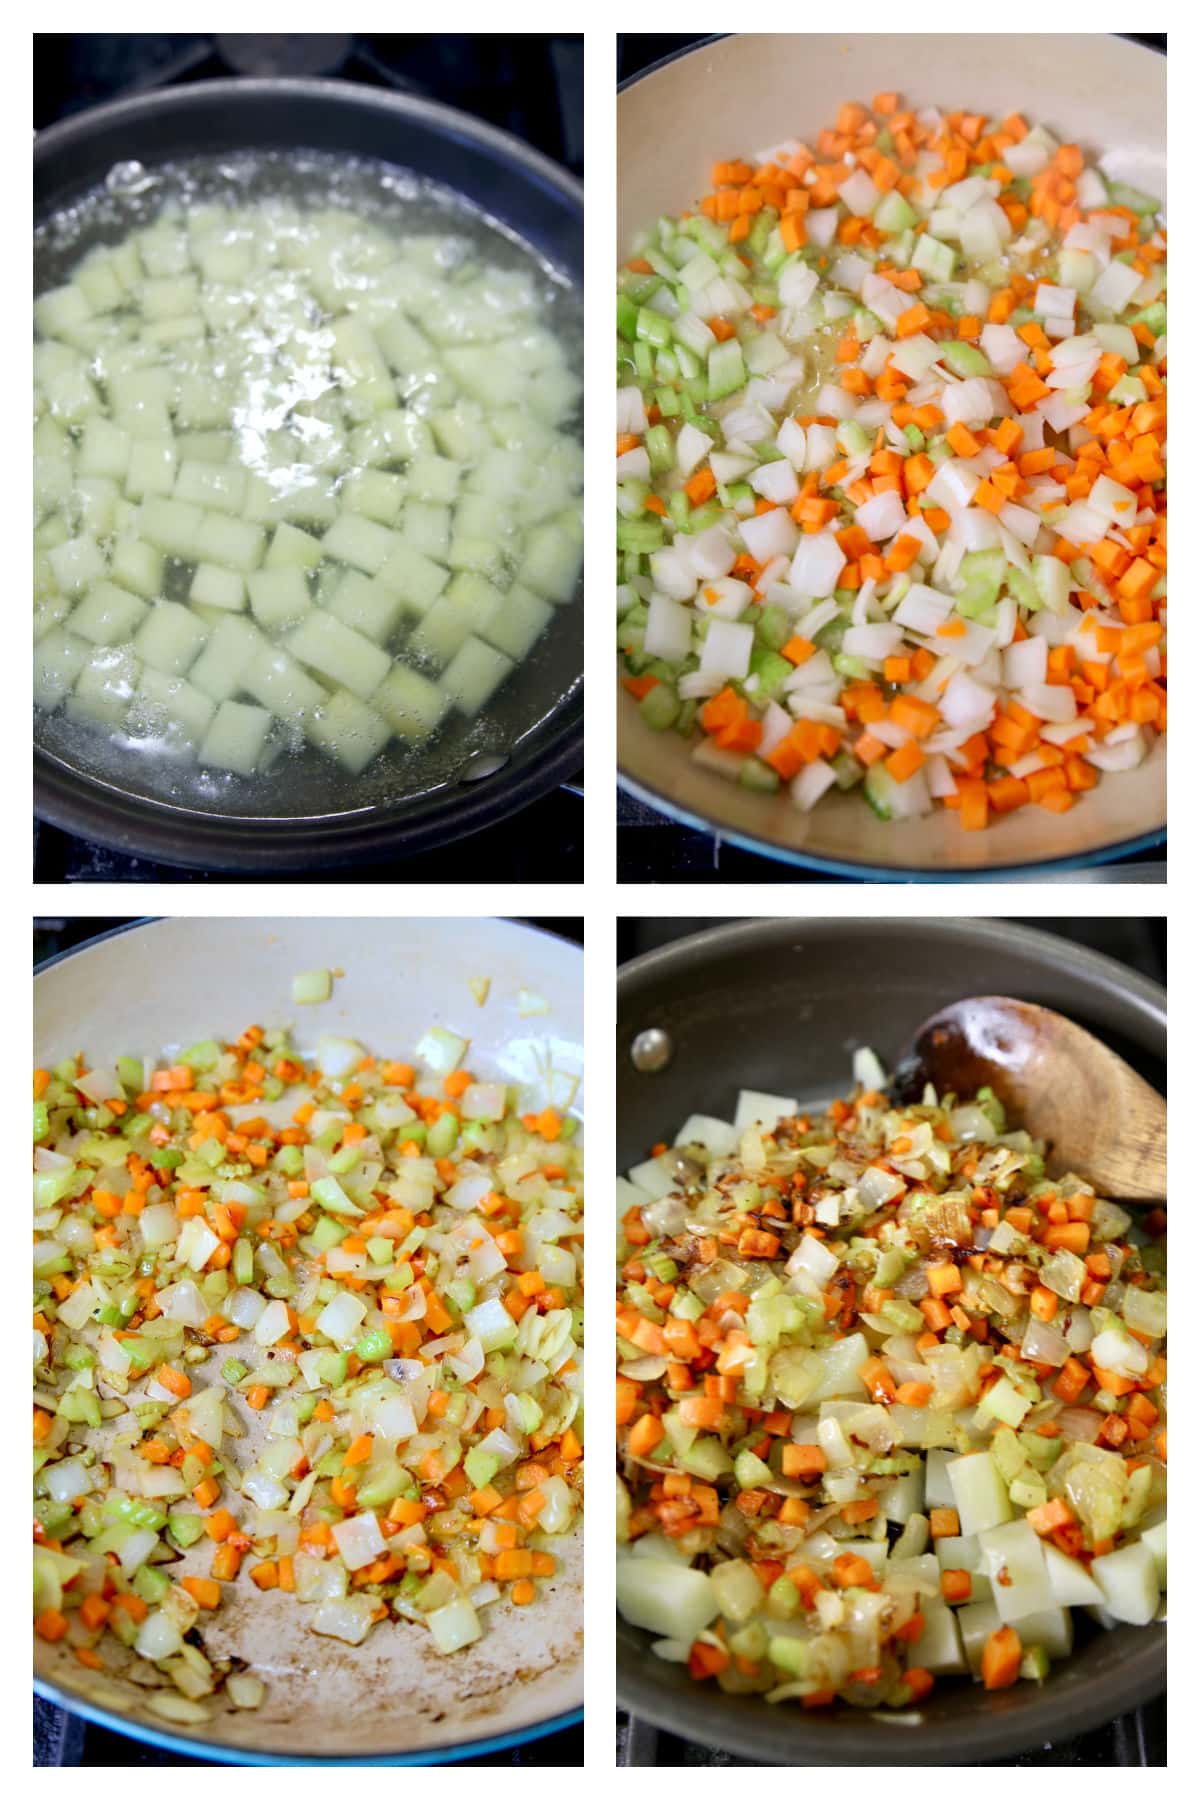 Collage cooking potatoes/ sautéing carrots, celery onions.